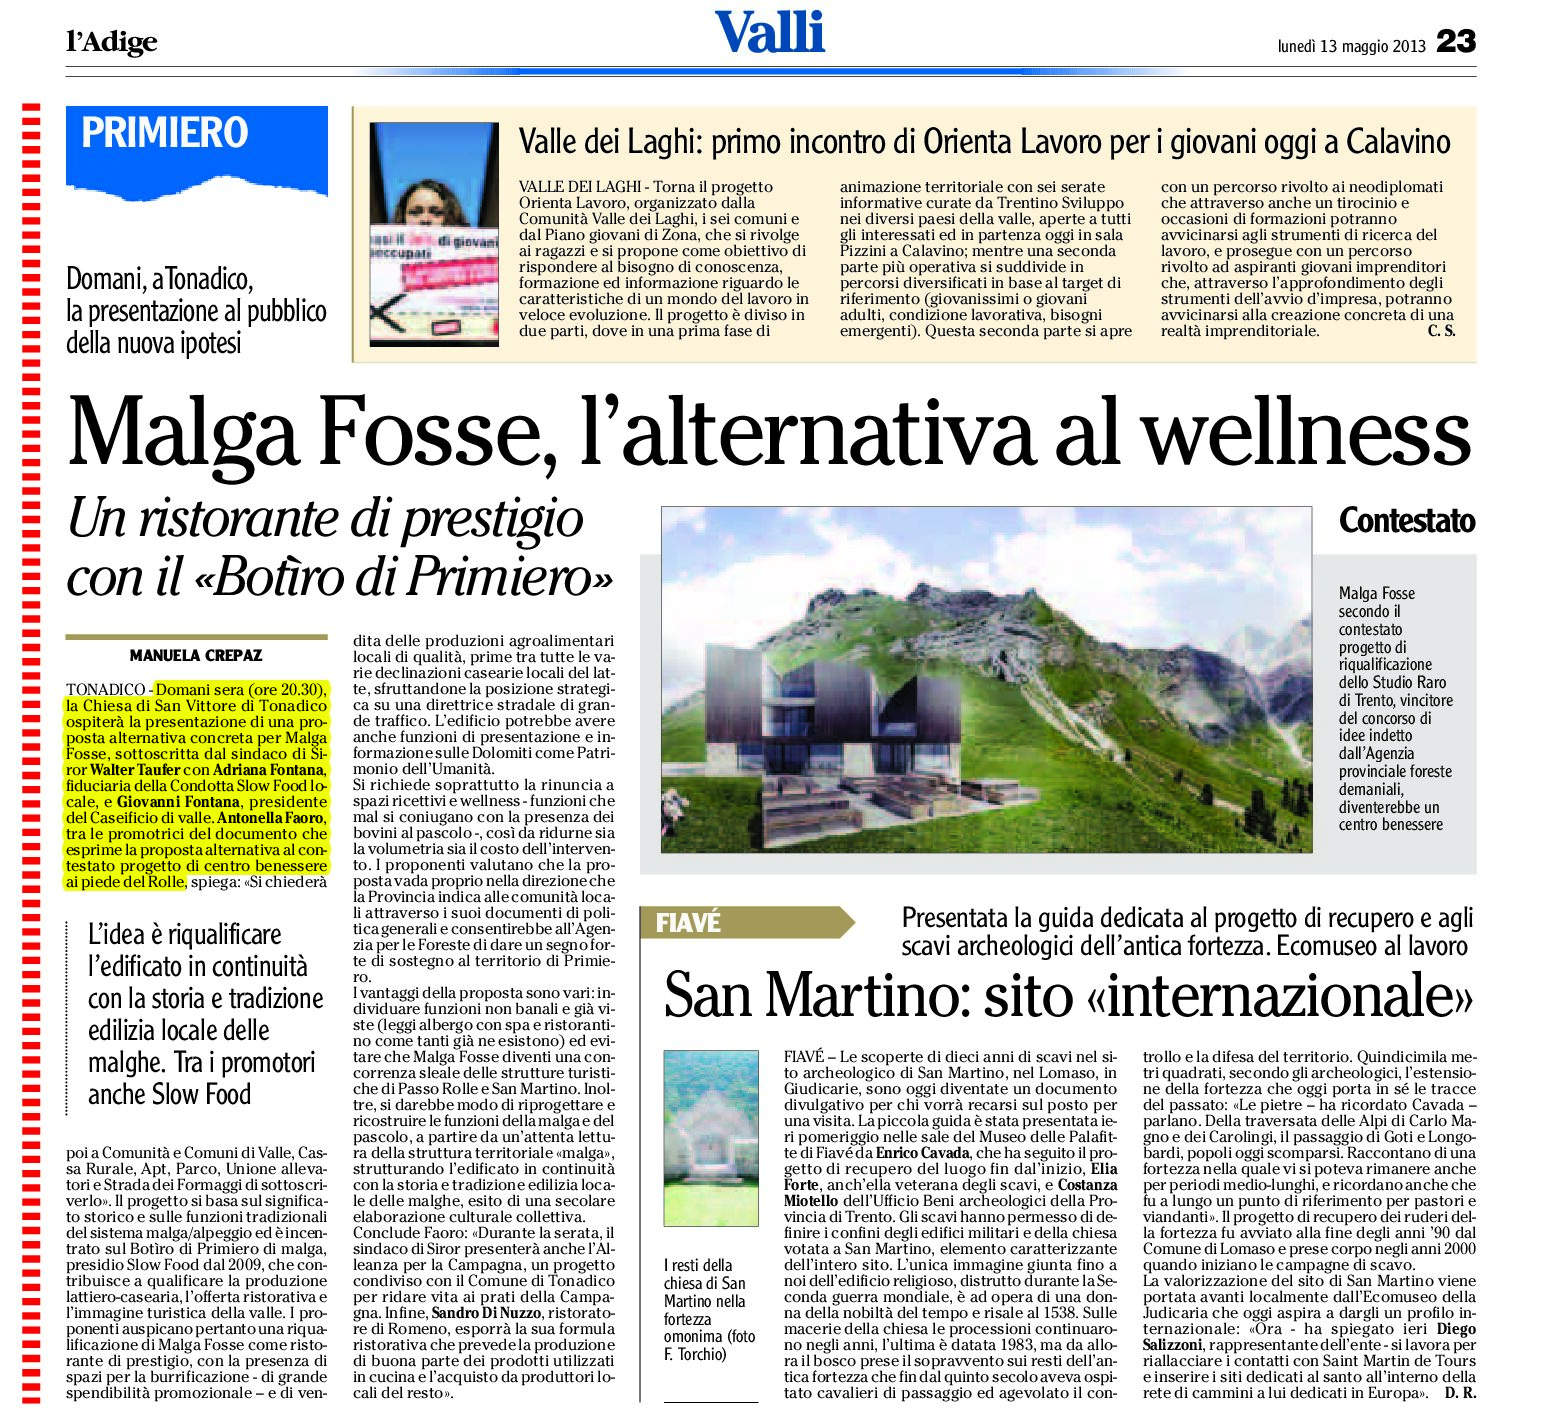 Tonadico: Malga Fosse, proposte alternative al wellness